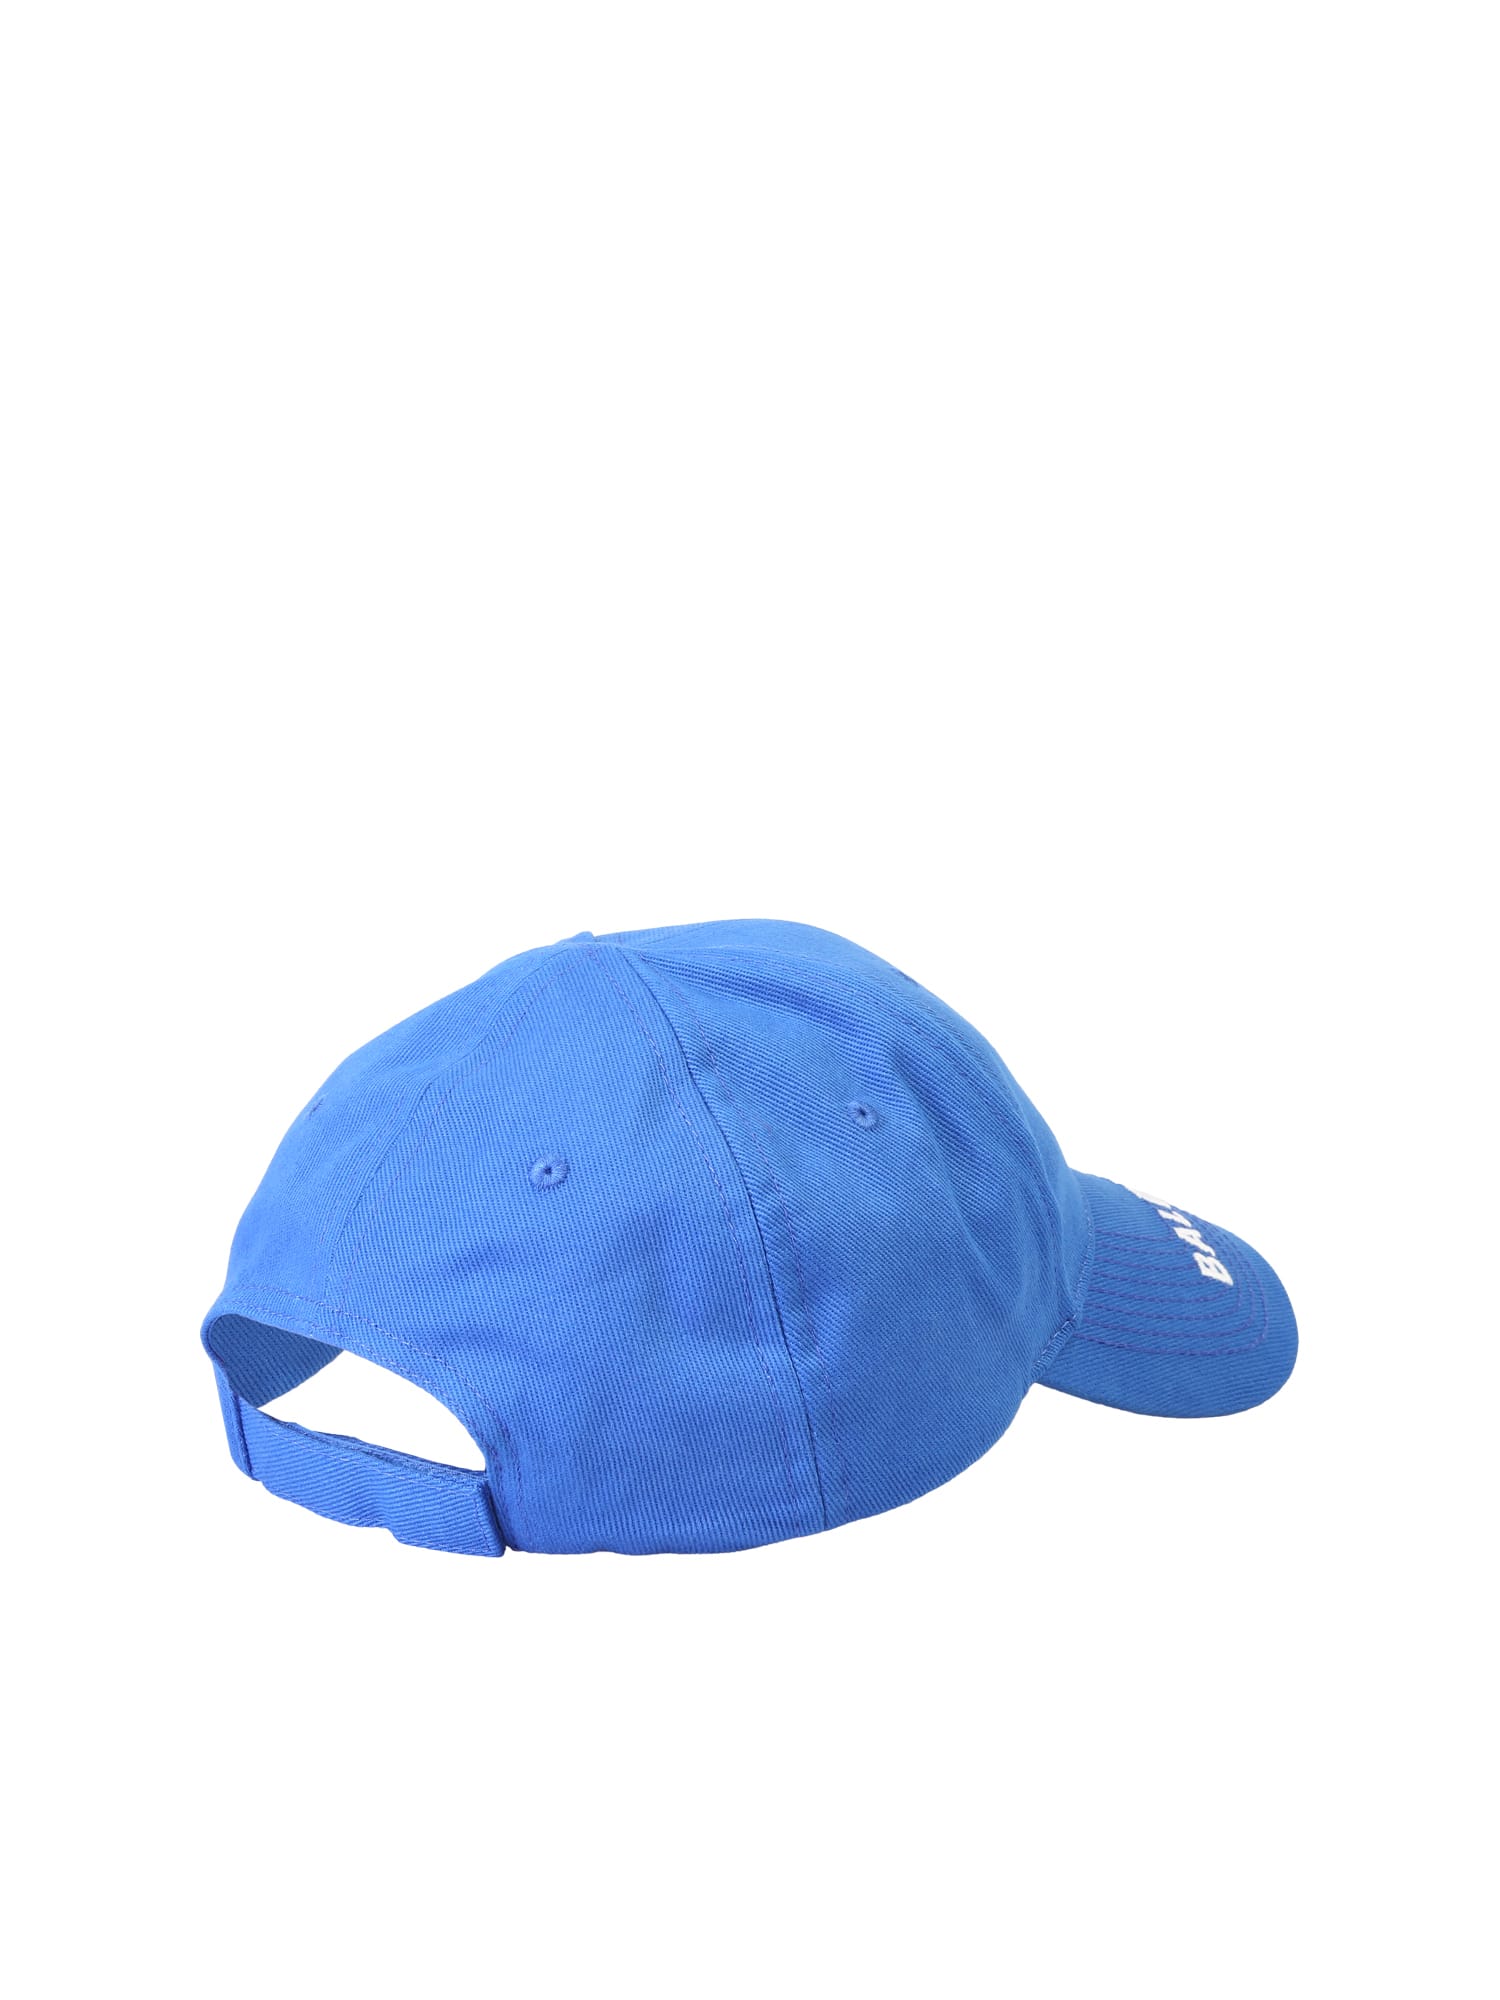 balenciaga hat blue